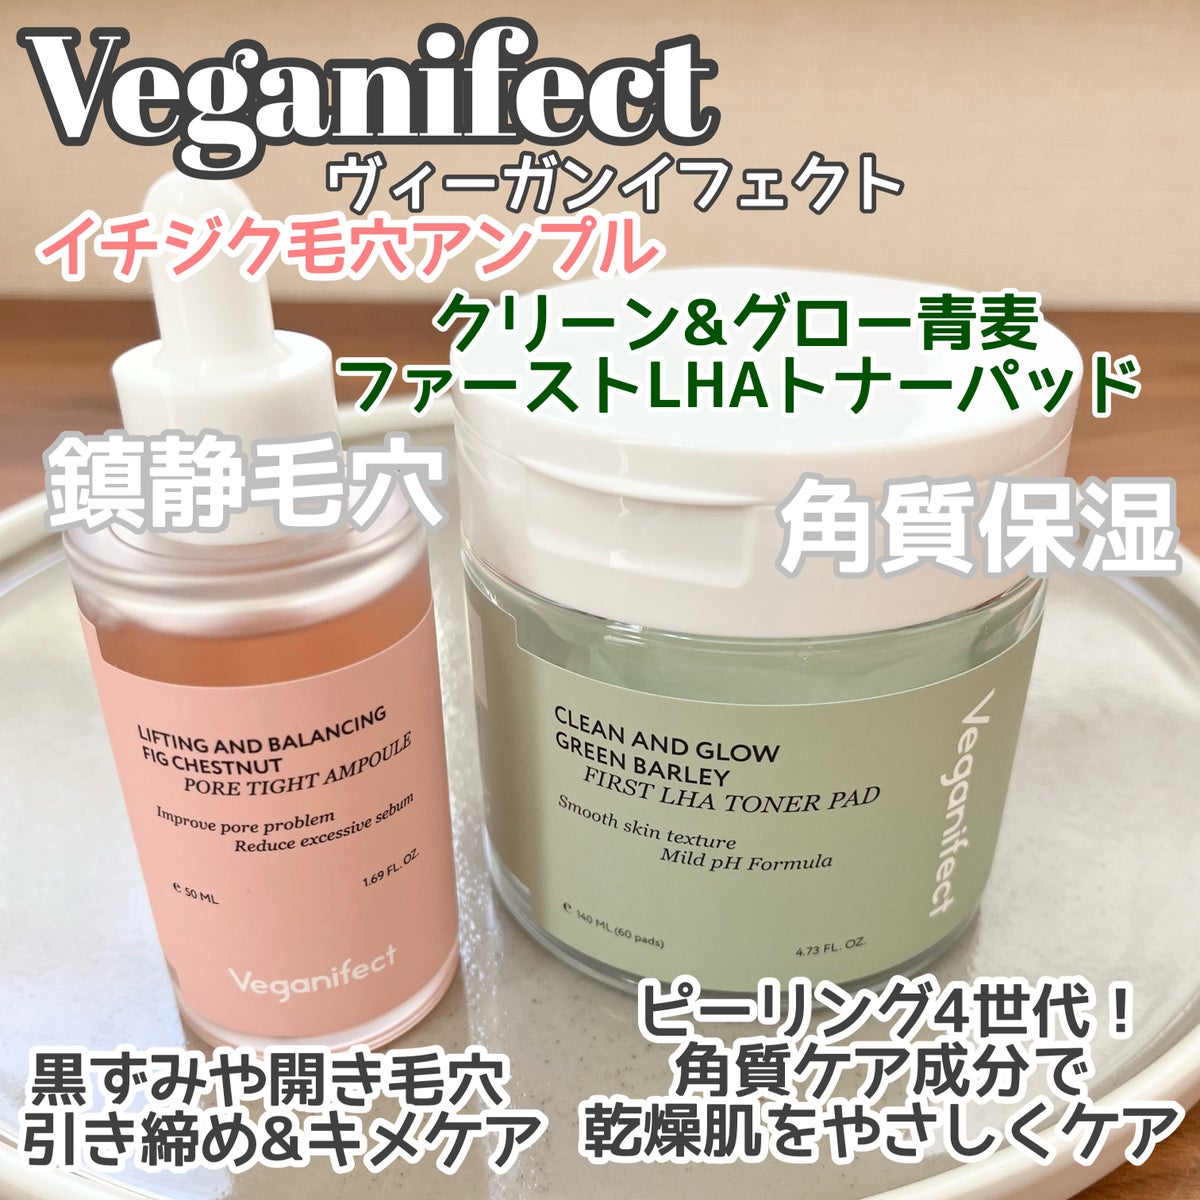 Veganifectのスキンケア・基礎化粧品 クリーン&グロー青麦ファースト